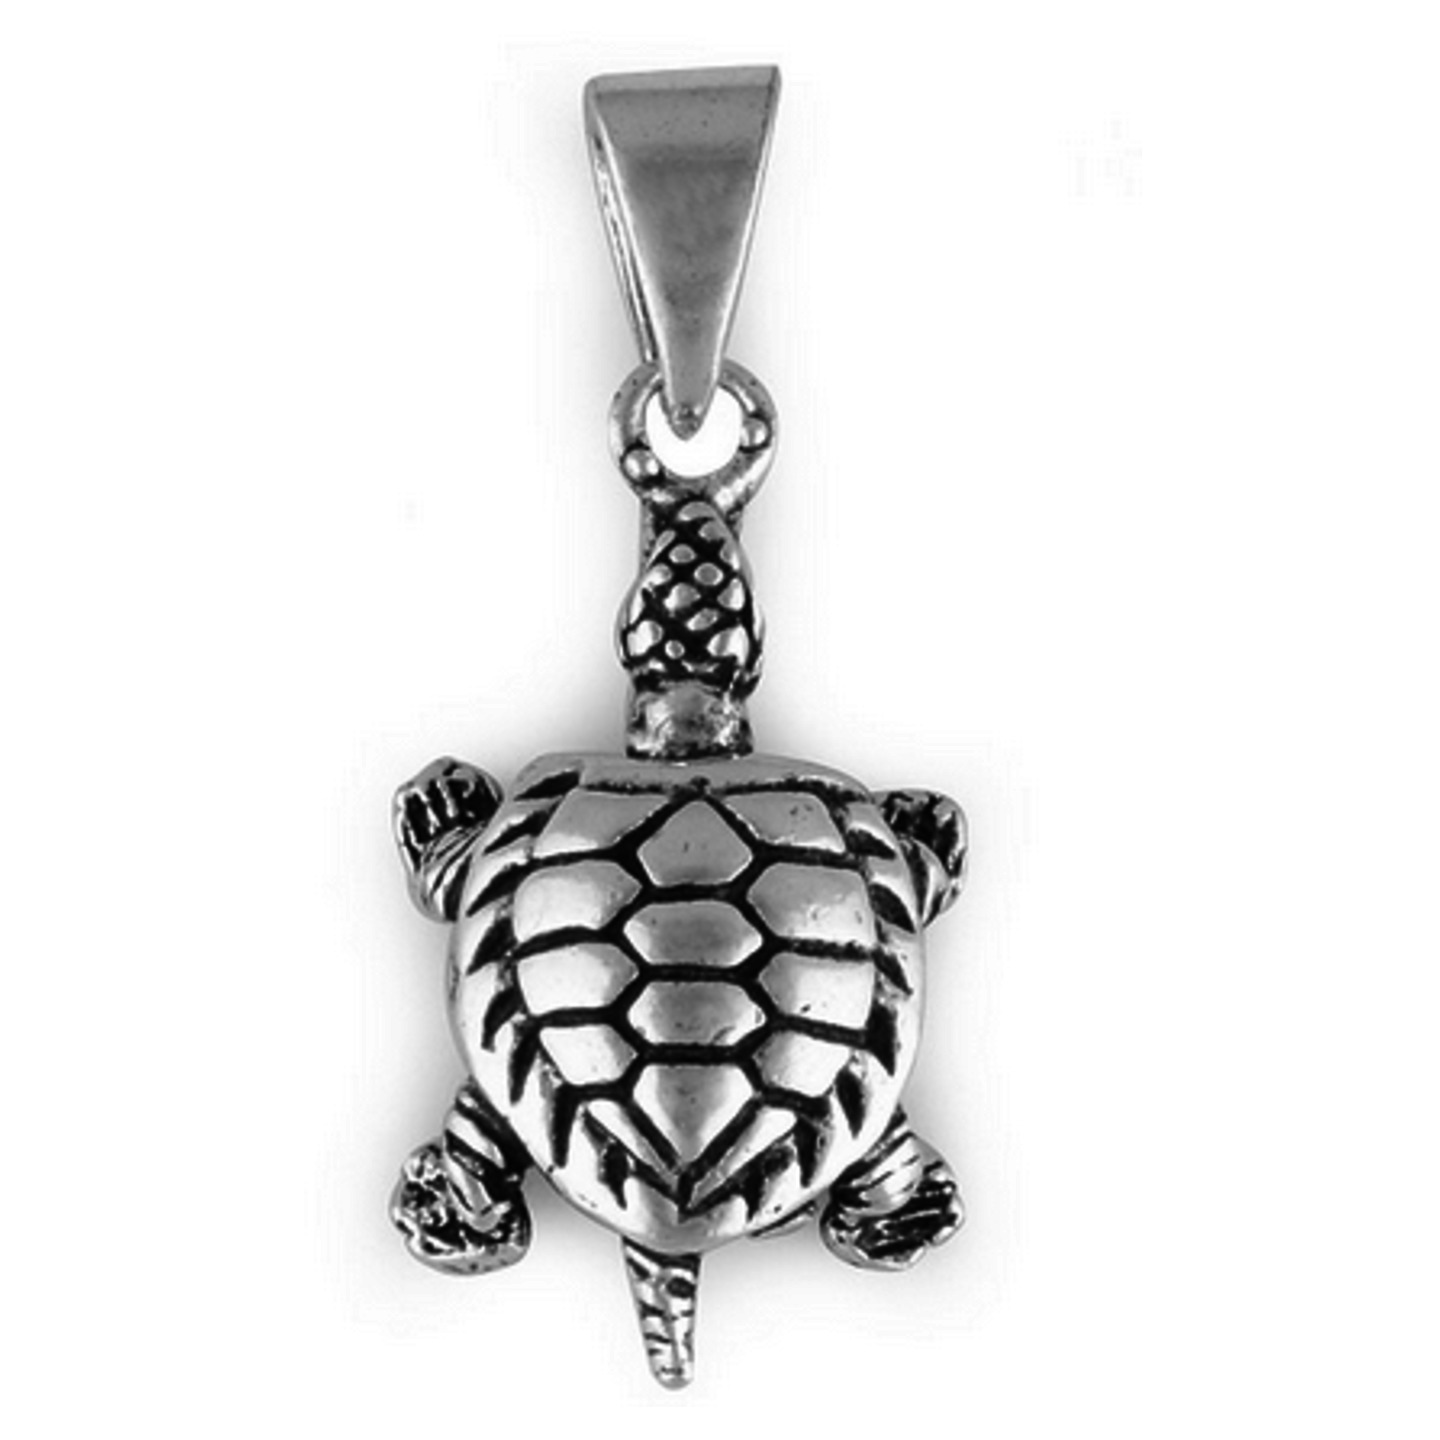 The Turtle Silver Pendant